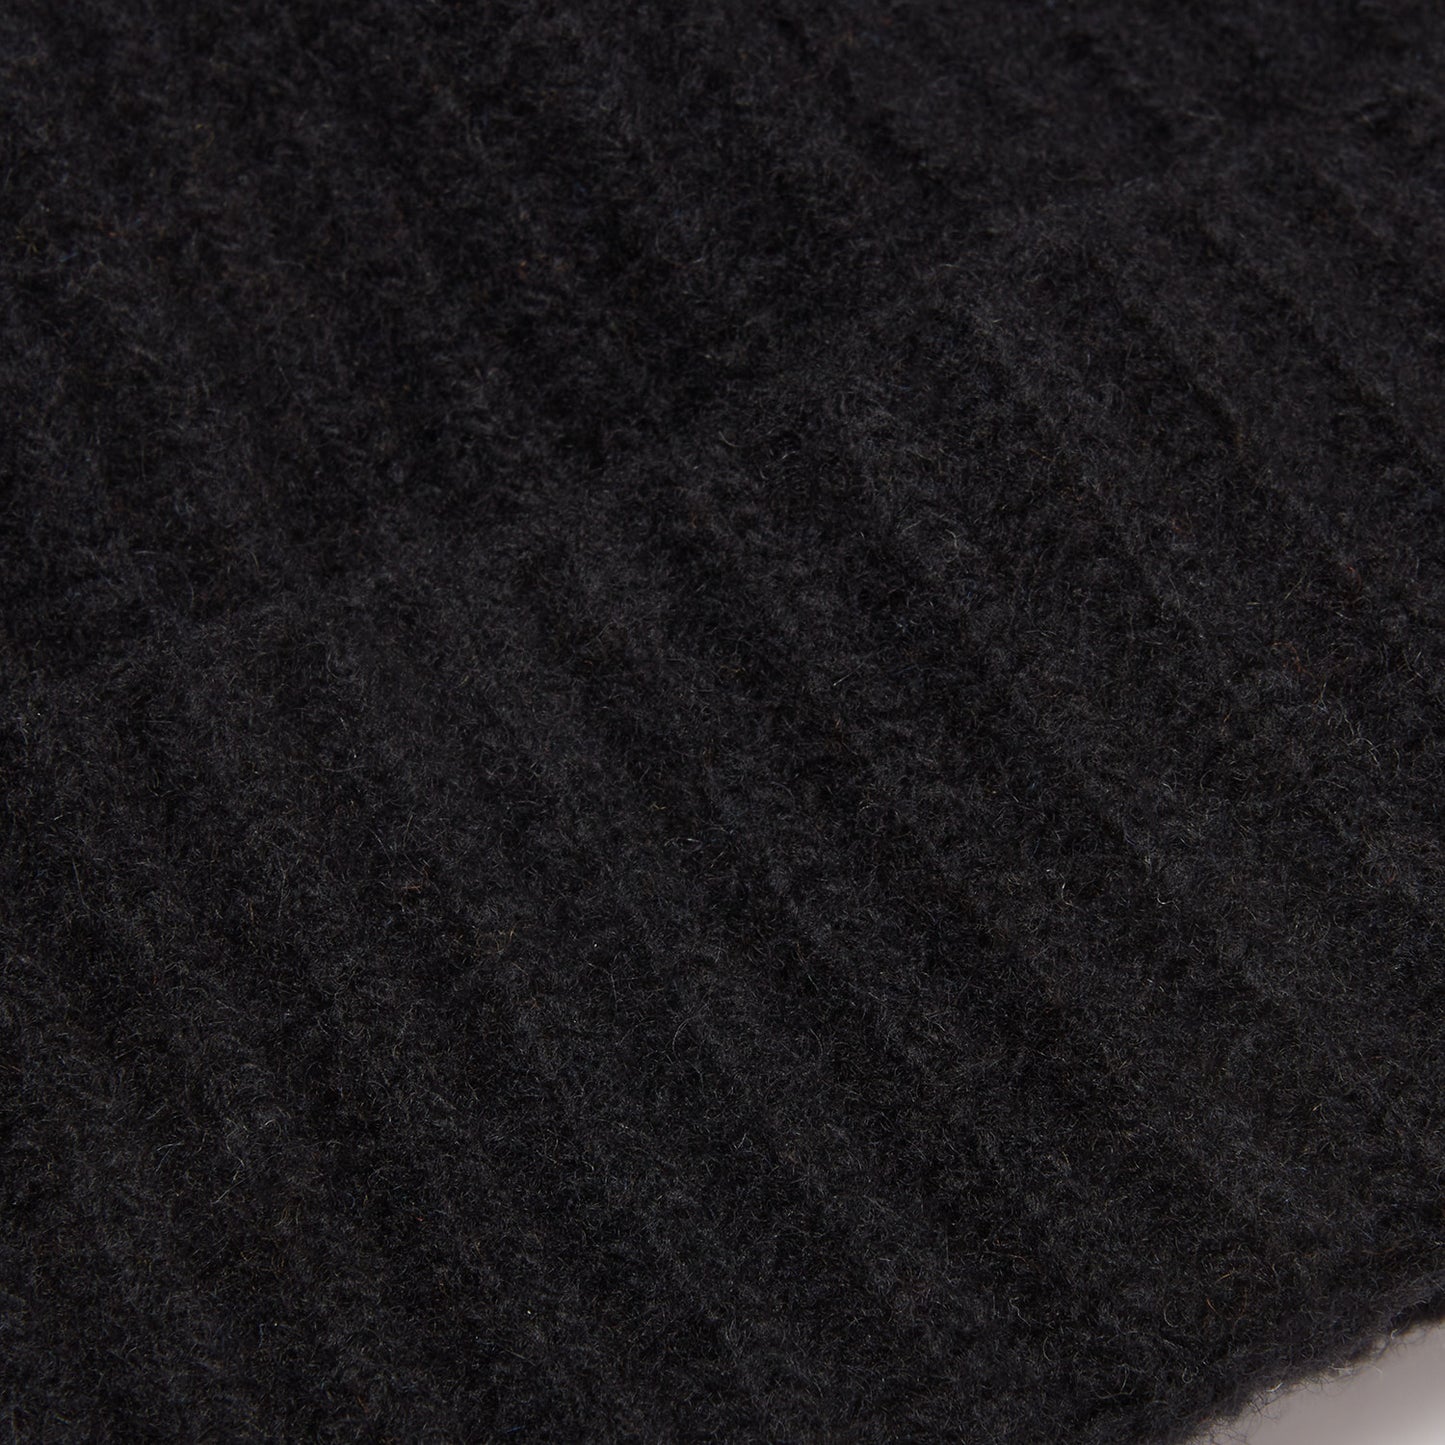 Remus Uomo 58581 00 Black Knitted Beanie Hat